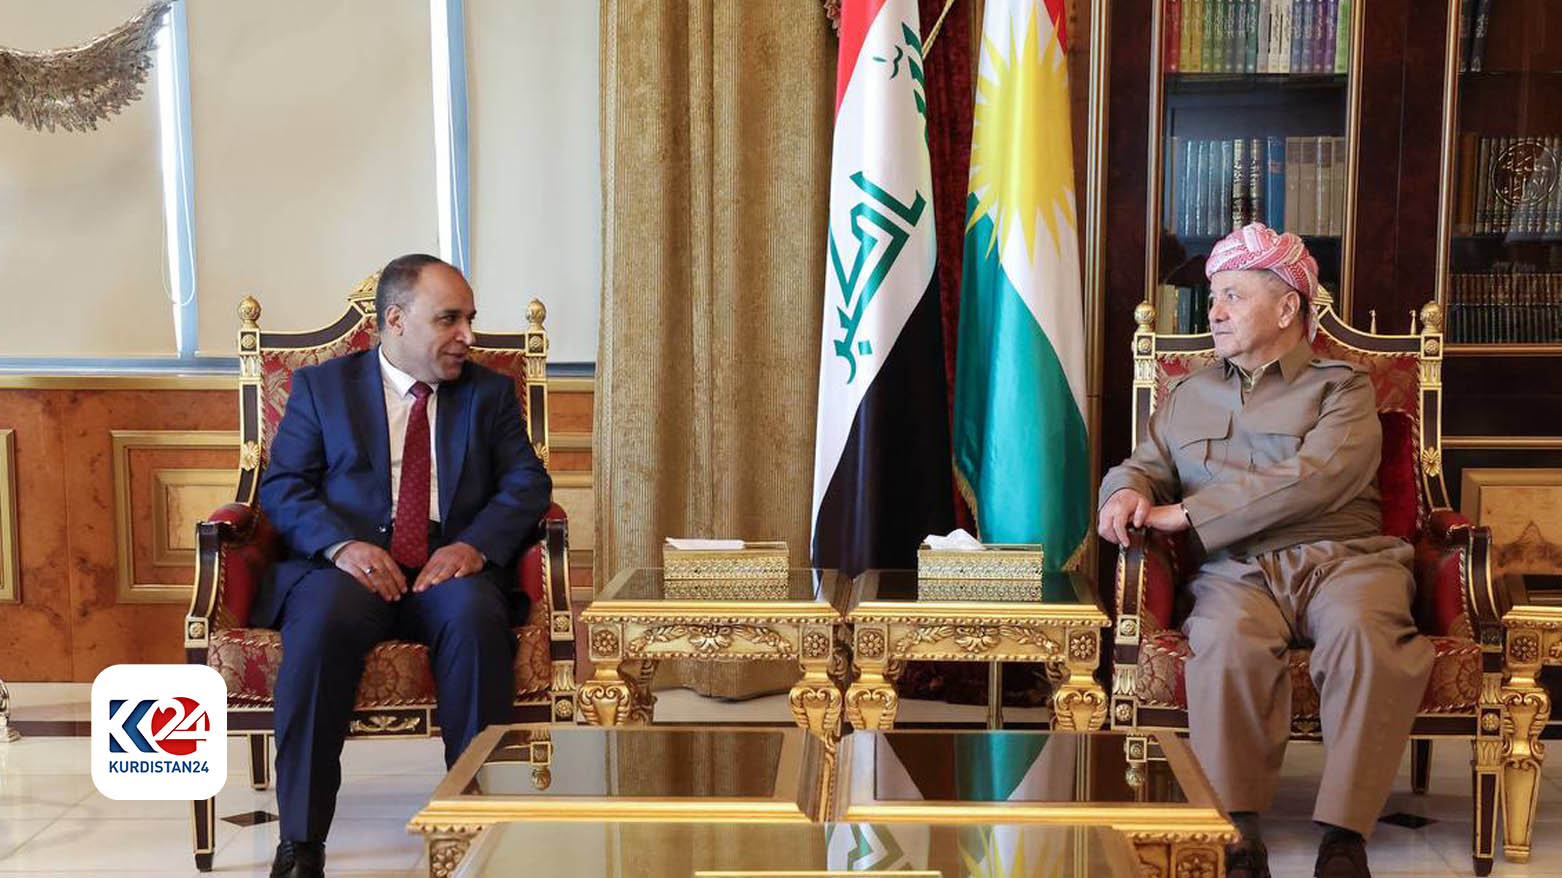 KDP President Masoud Barzani (R) and Judge Abbas Farhan Hussein (L). (Photo: Kurdistan 24)